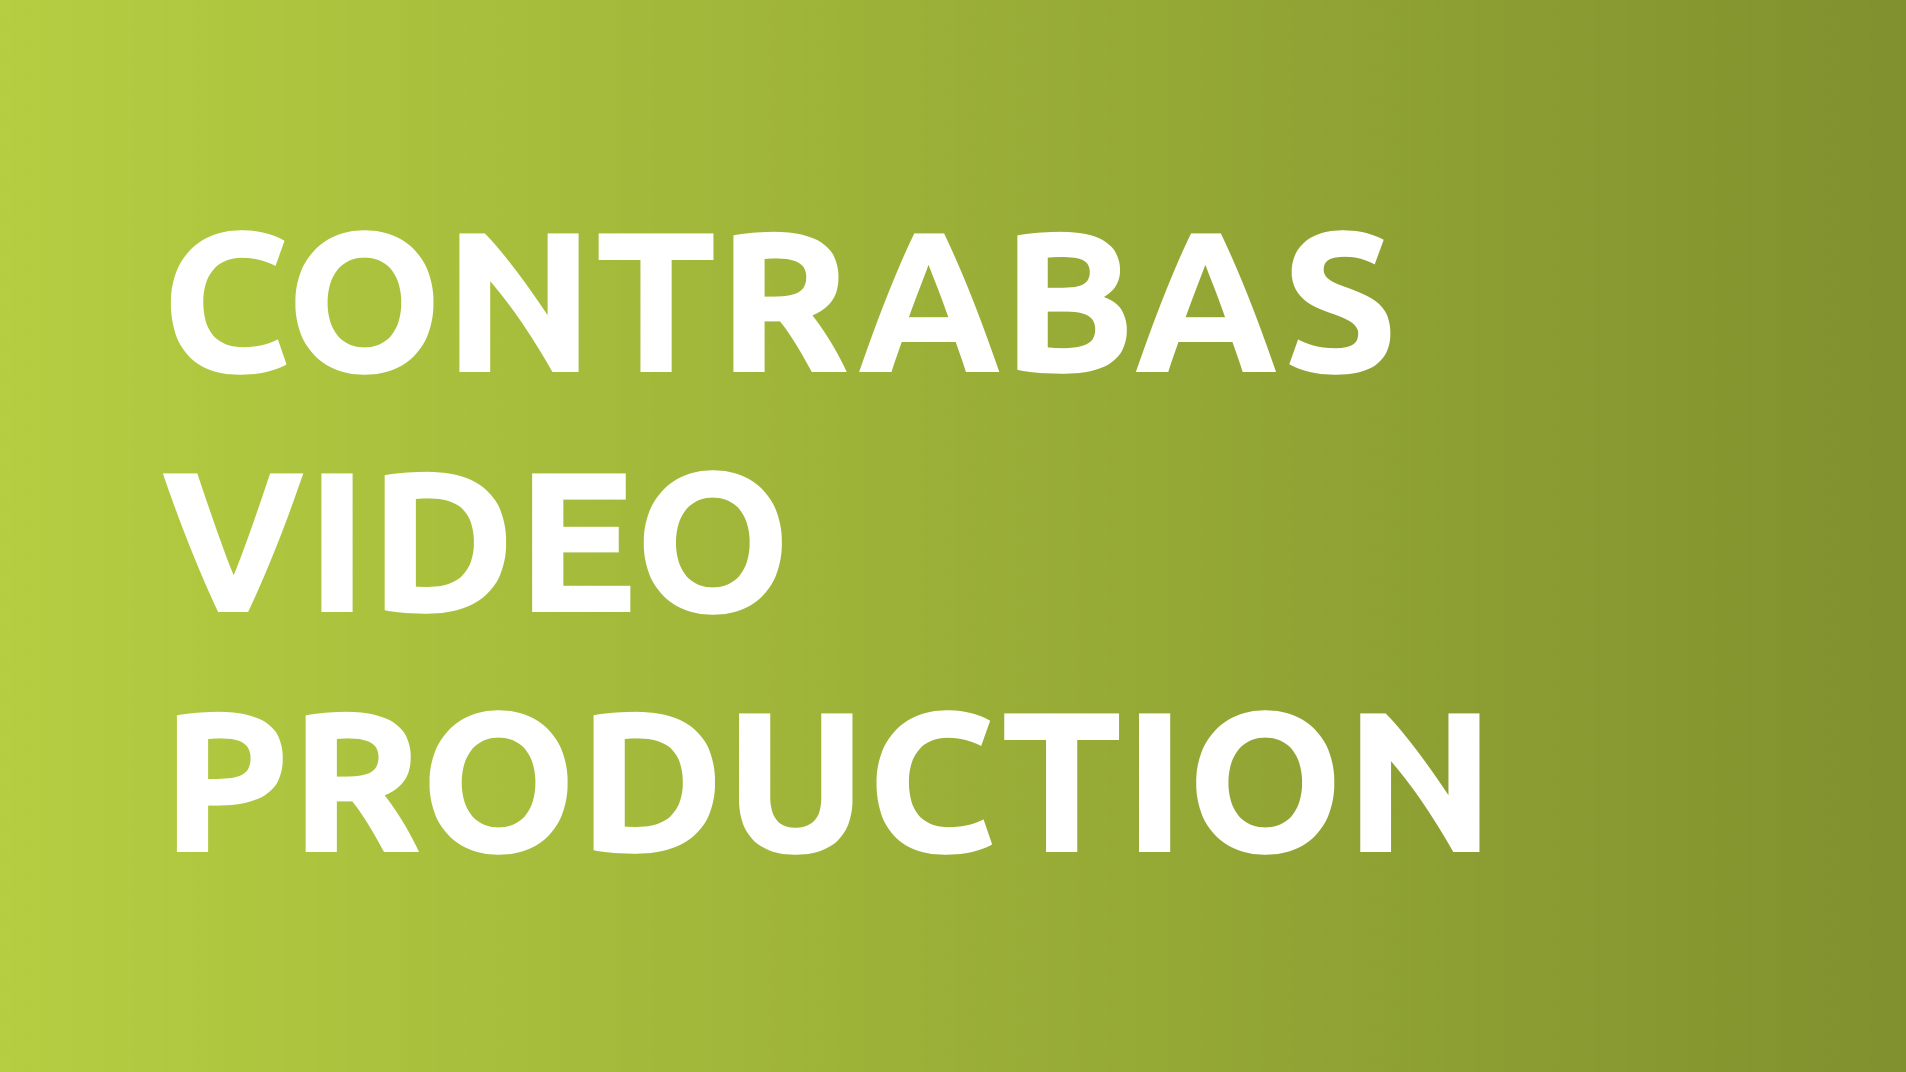 Contrabas video production